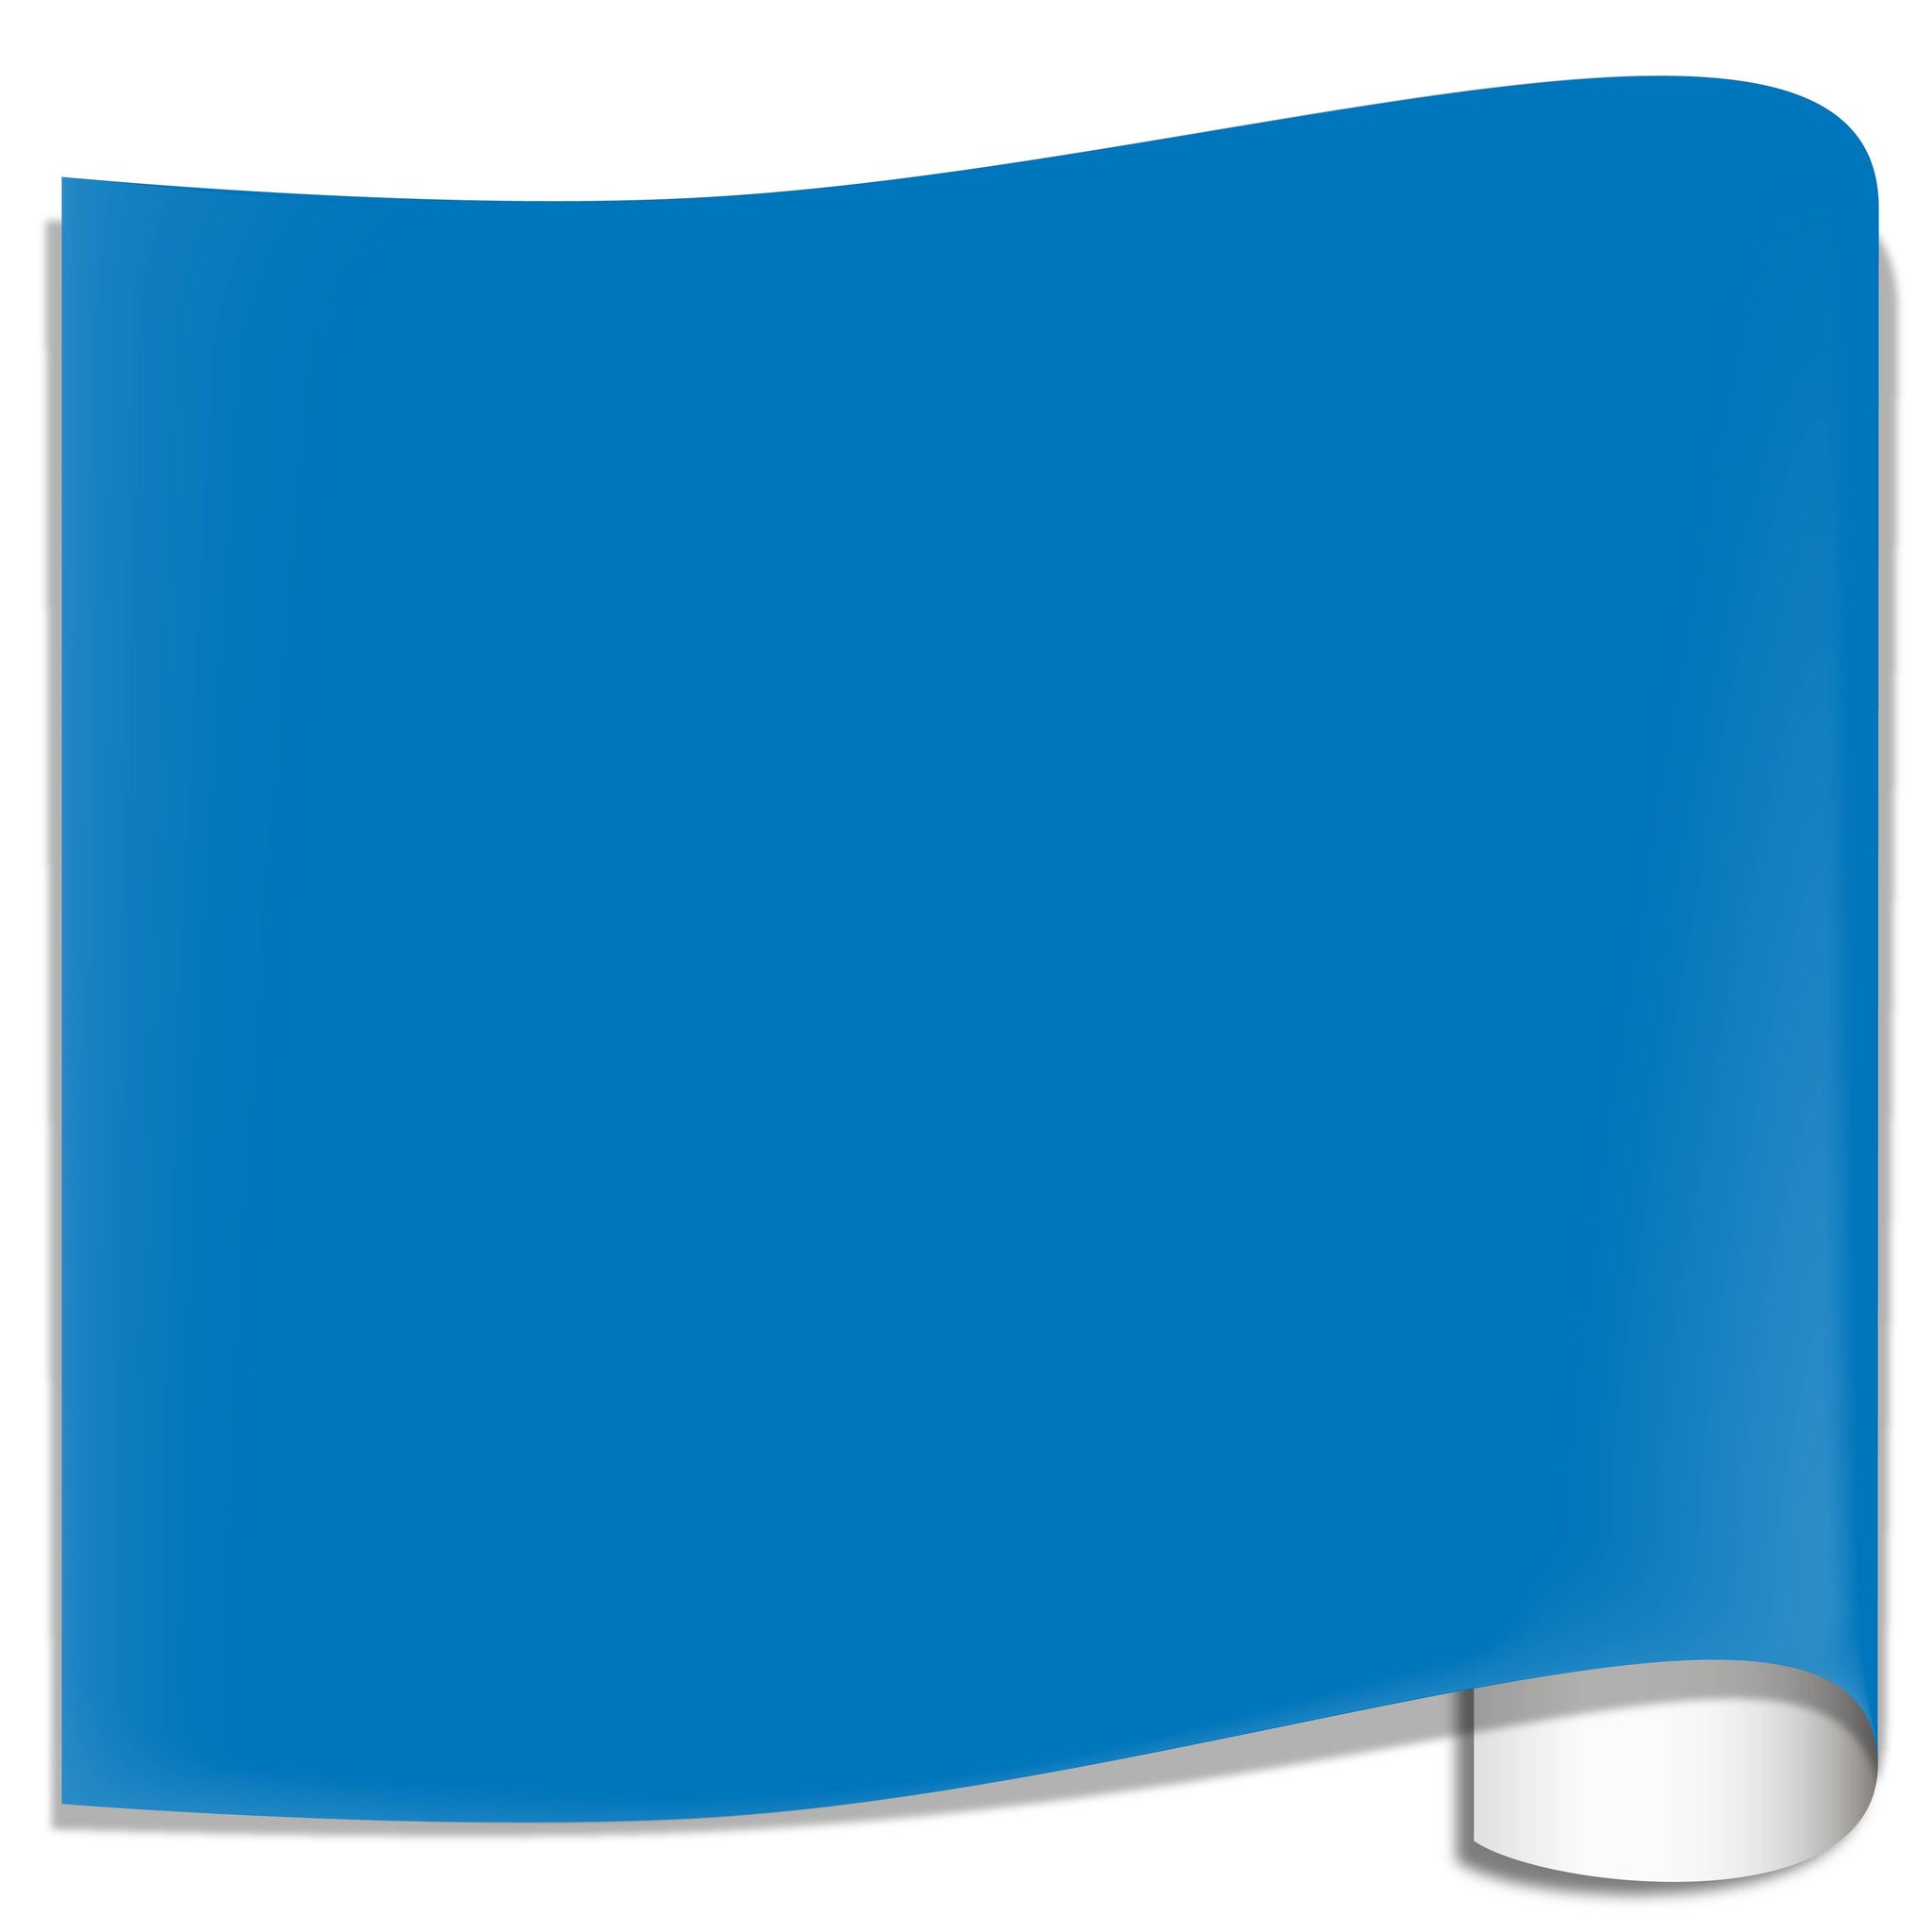 Oracal 651 - Dark Blue - 050 - 12 x 12 sheets